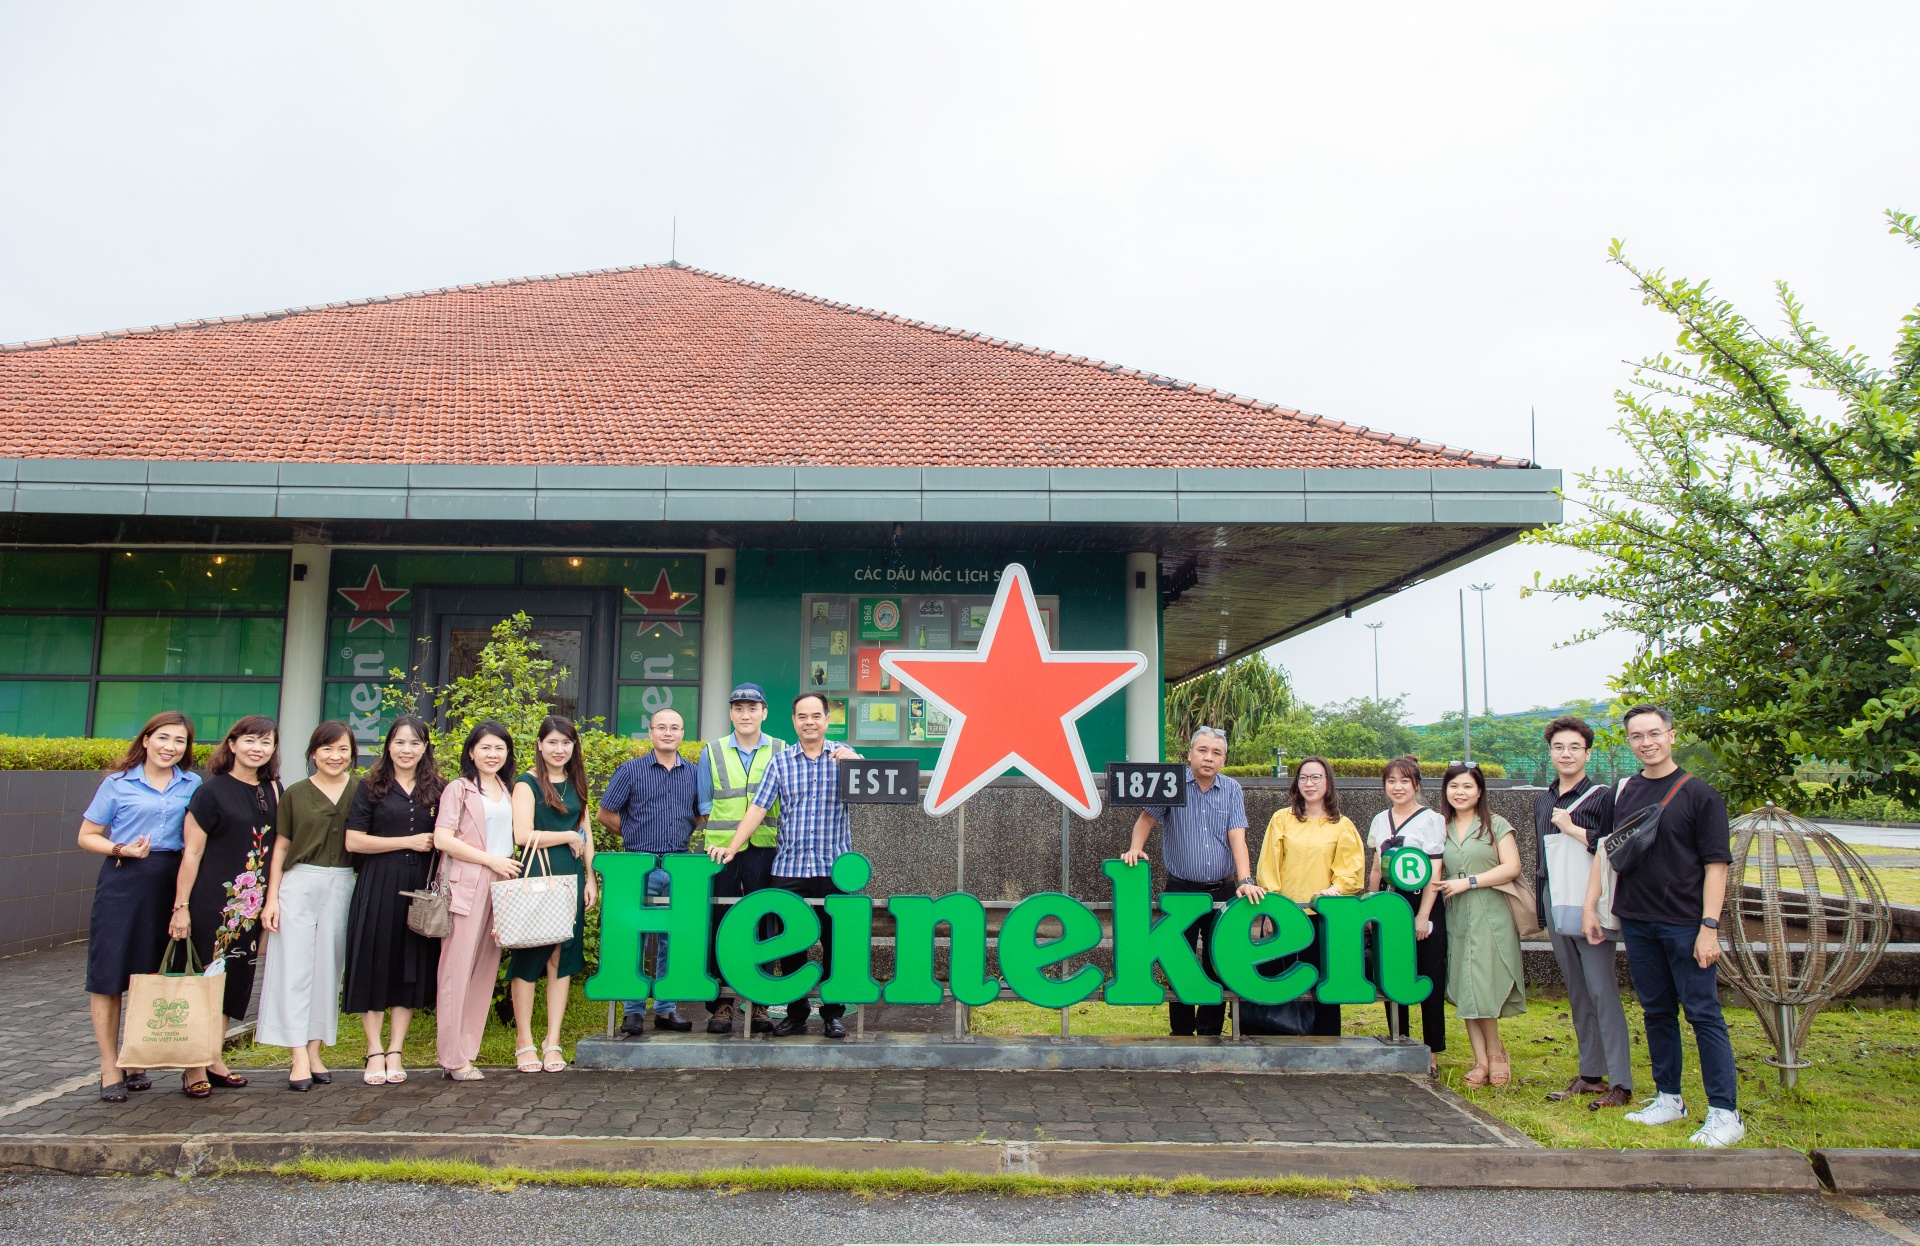 Heineken Vietnam - Hanoi Brewery was established and built in 1996 in Thuong Tin district, Hanoi.